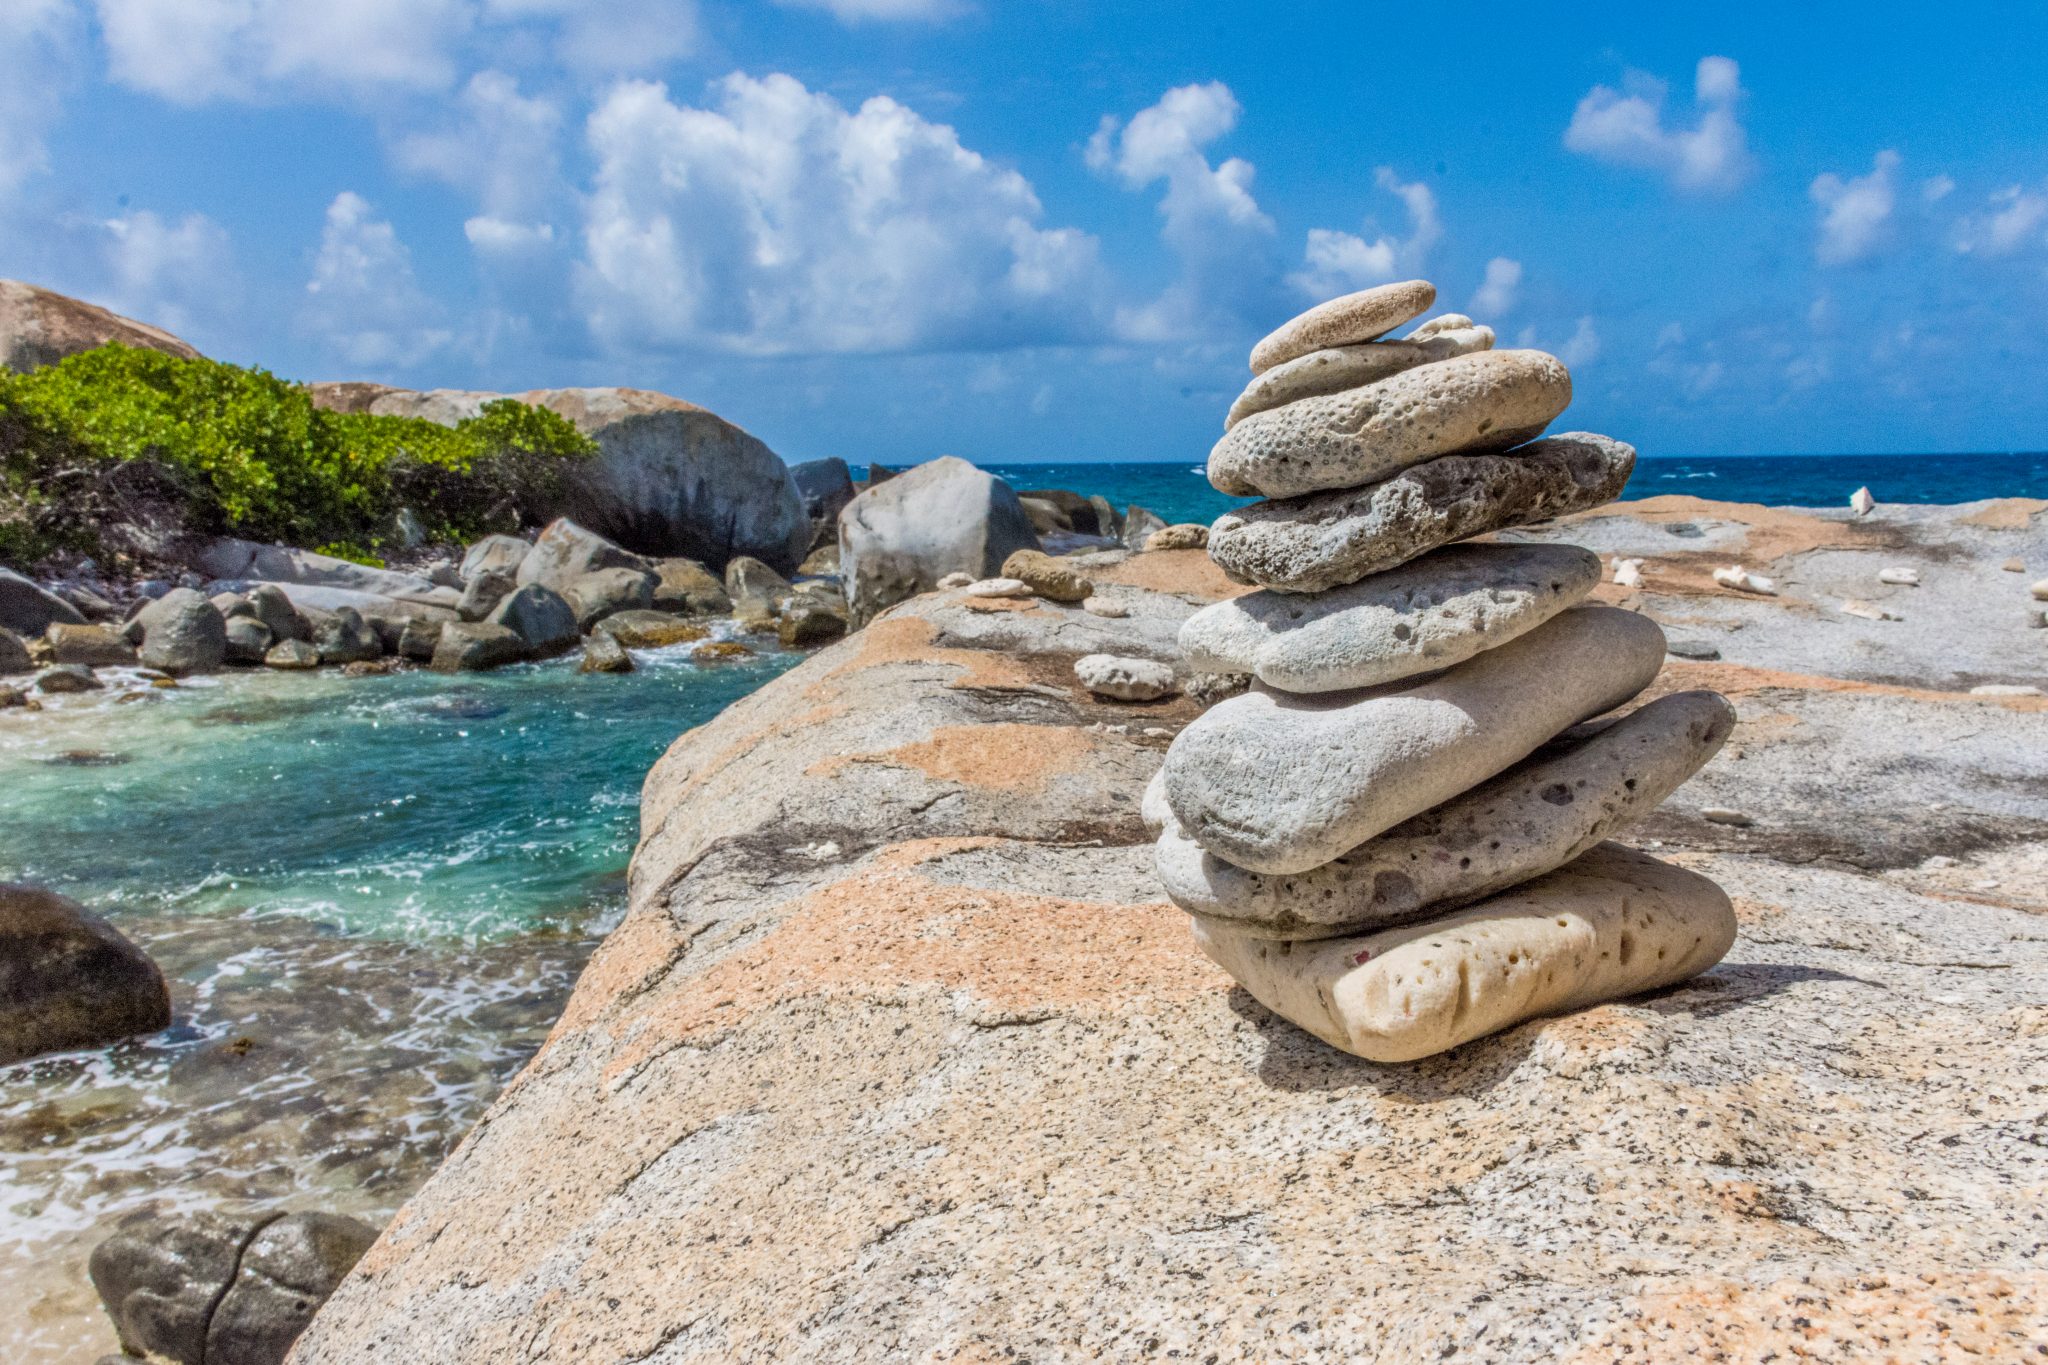 Stacked rocks in the British Virgin Islands